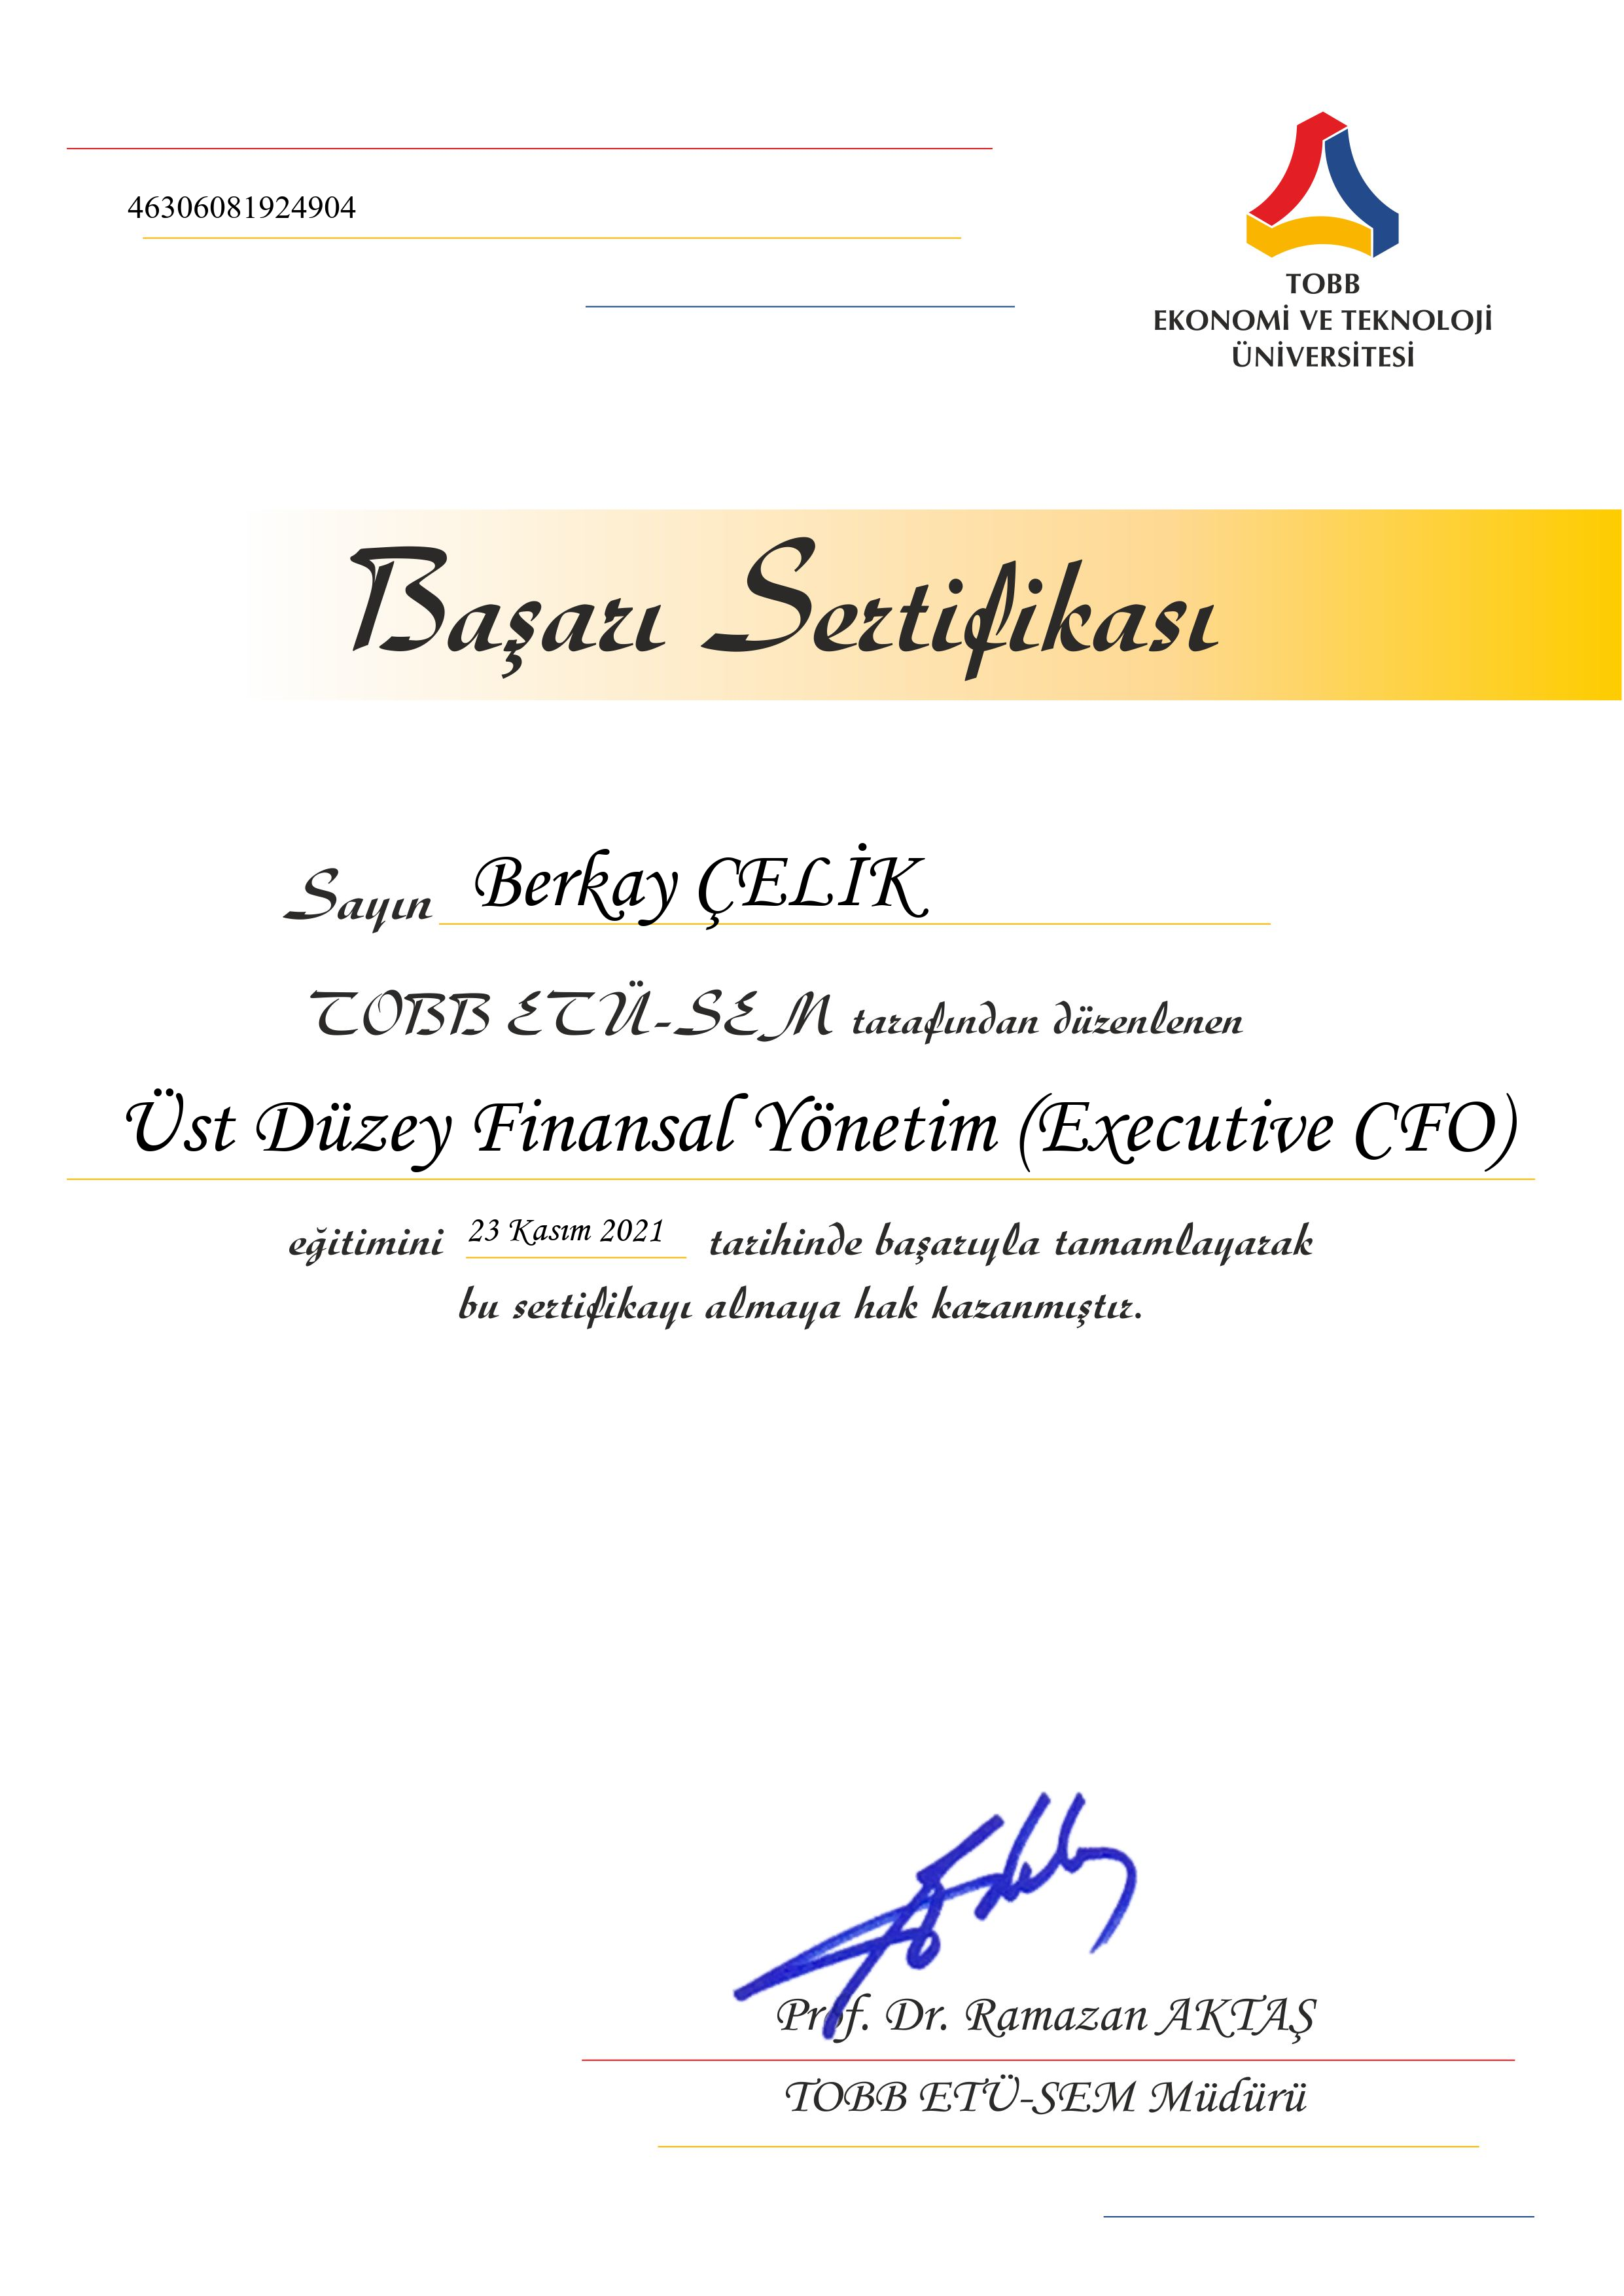 ust-duzey-finansal-yonetim-sertifika